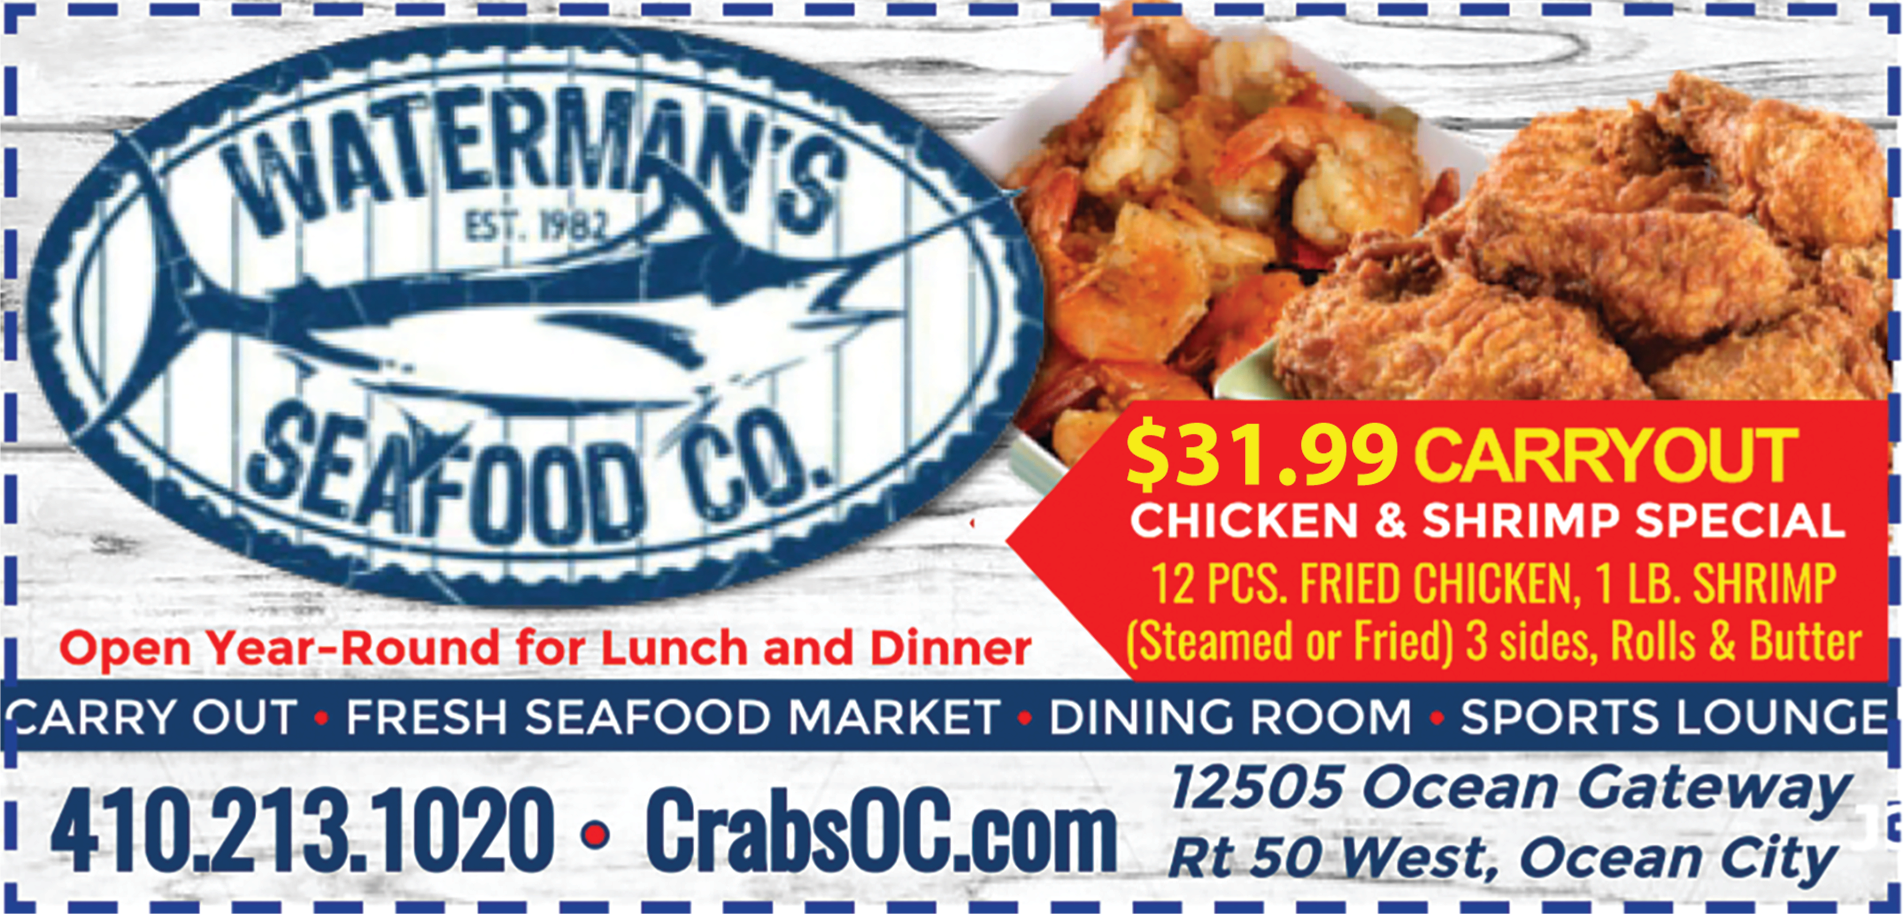 WATERMAN'S SEAFOOD Print Ad